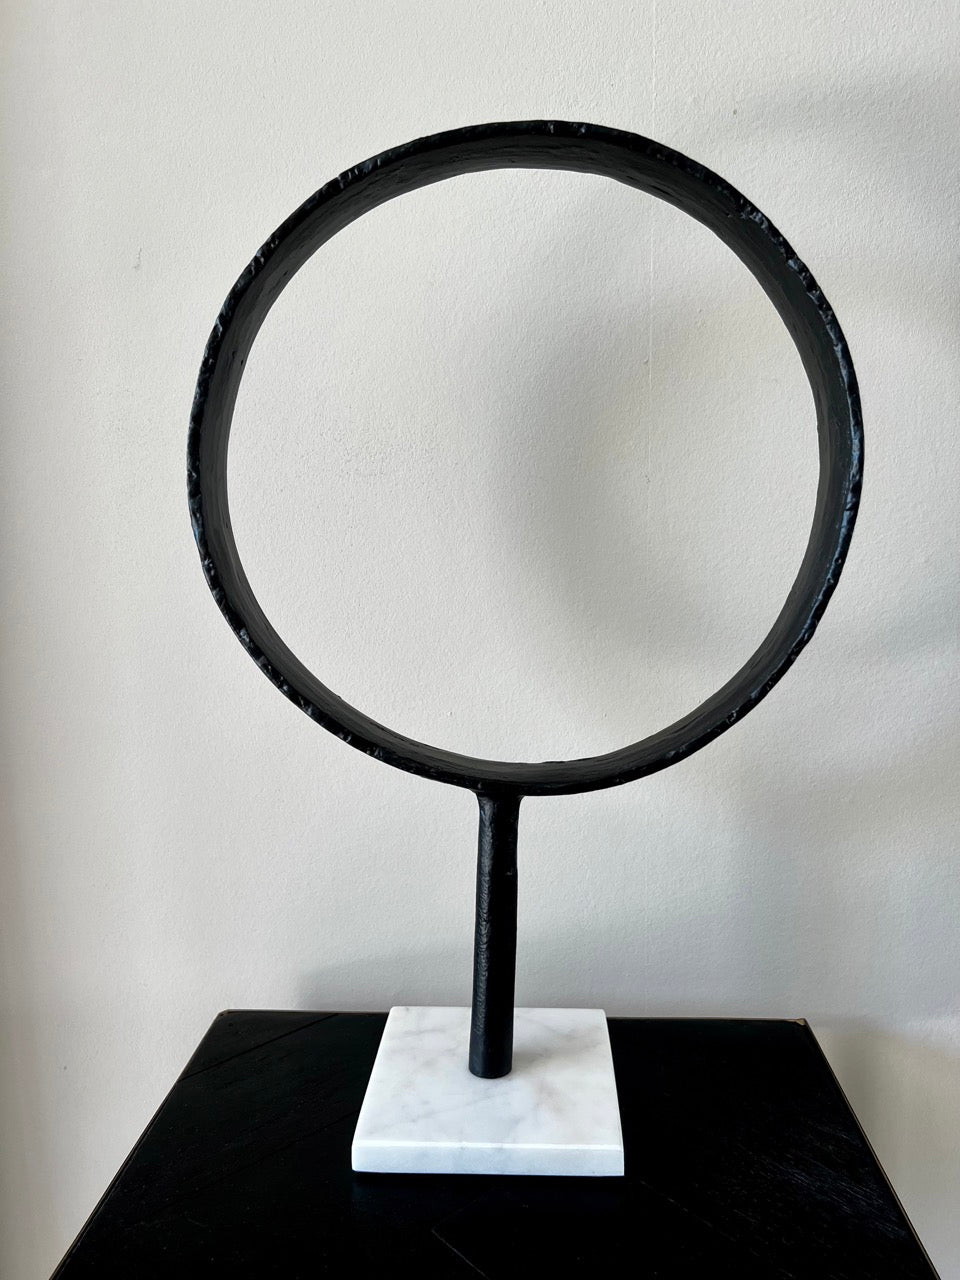 Black metal ring on marble base - black/white - 43 cm high